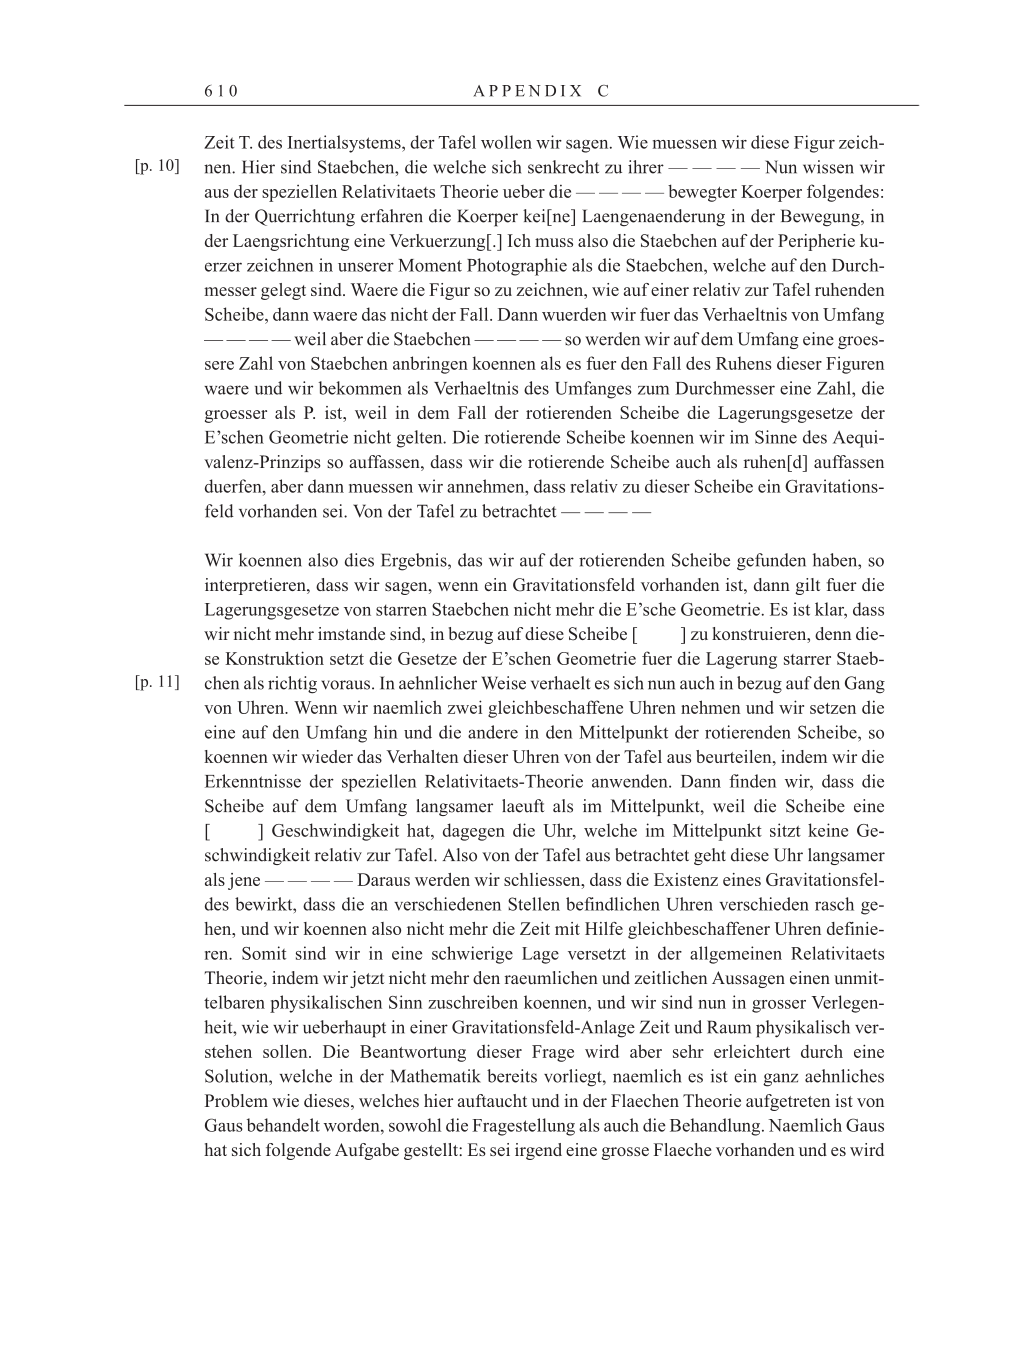 Volume 7: The Berlin Years: Writings, 1918-1921 page 610